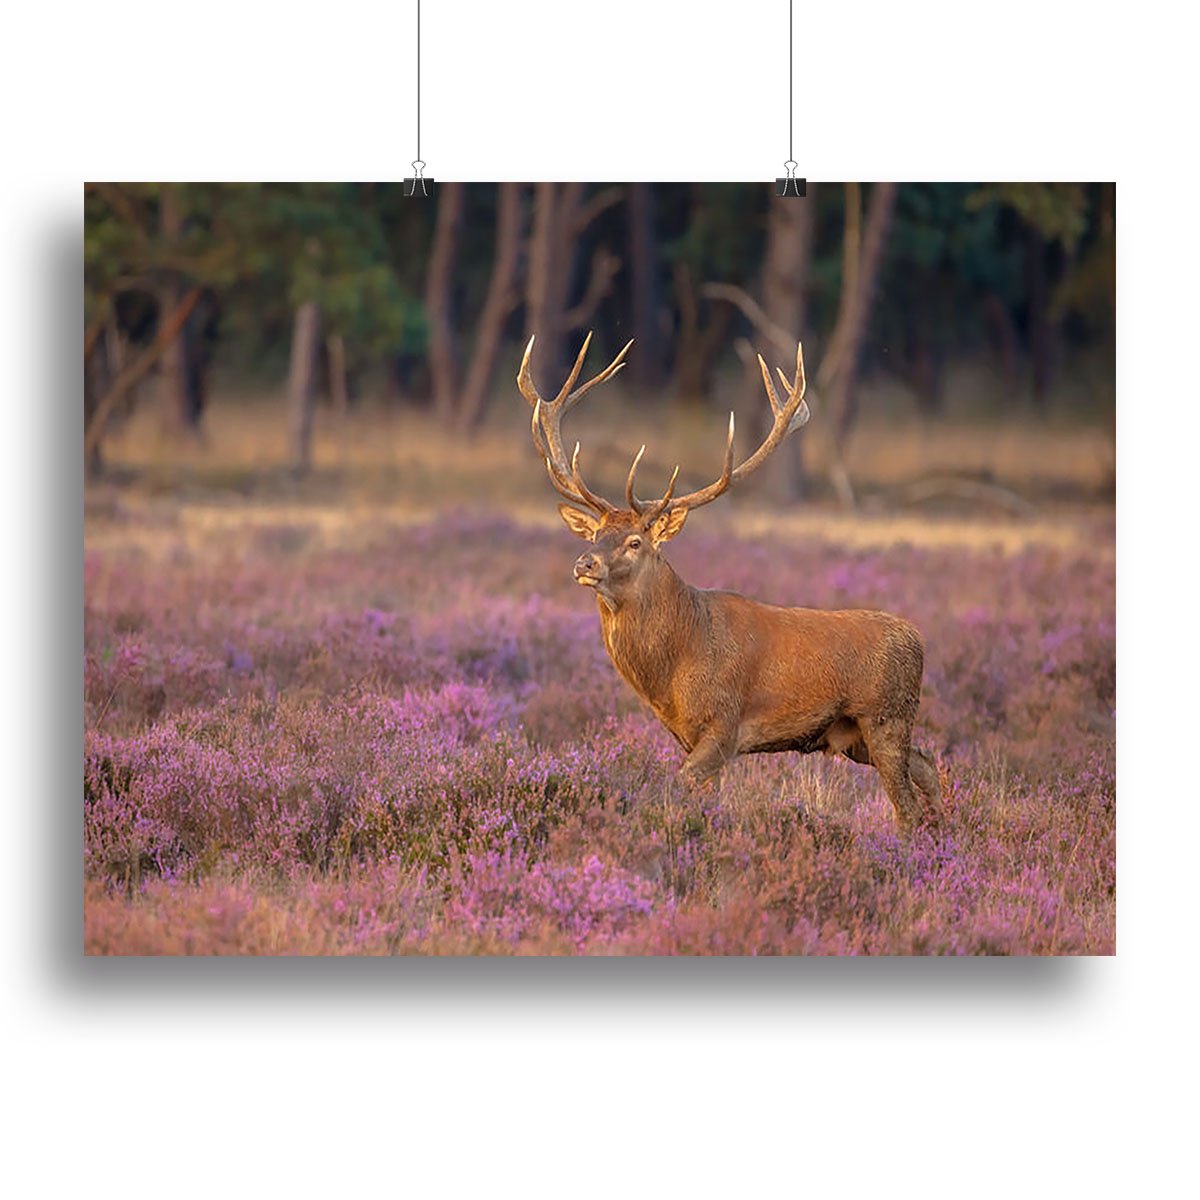 Male red deer Cervus elaphus with antlers during mating season Canvas Print or Poster